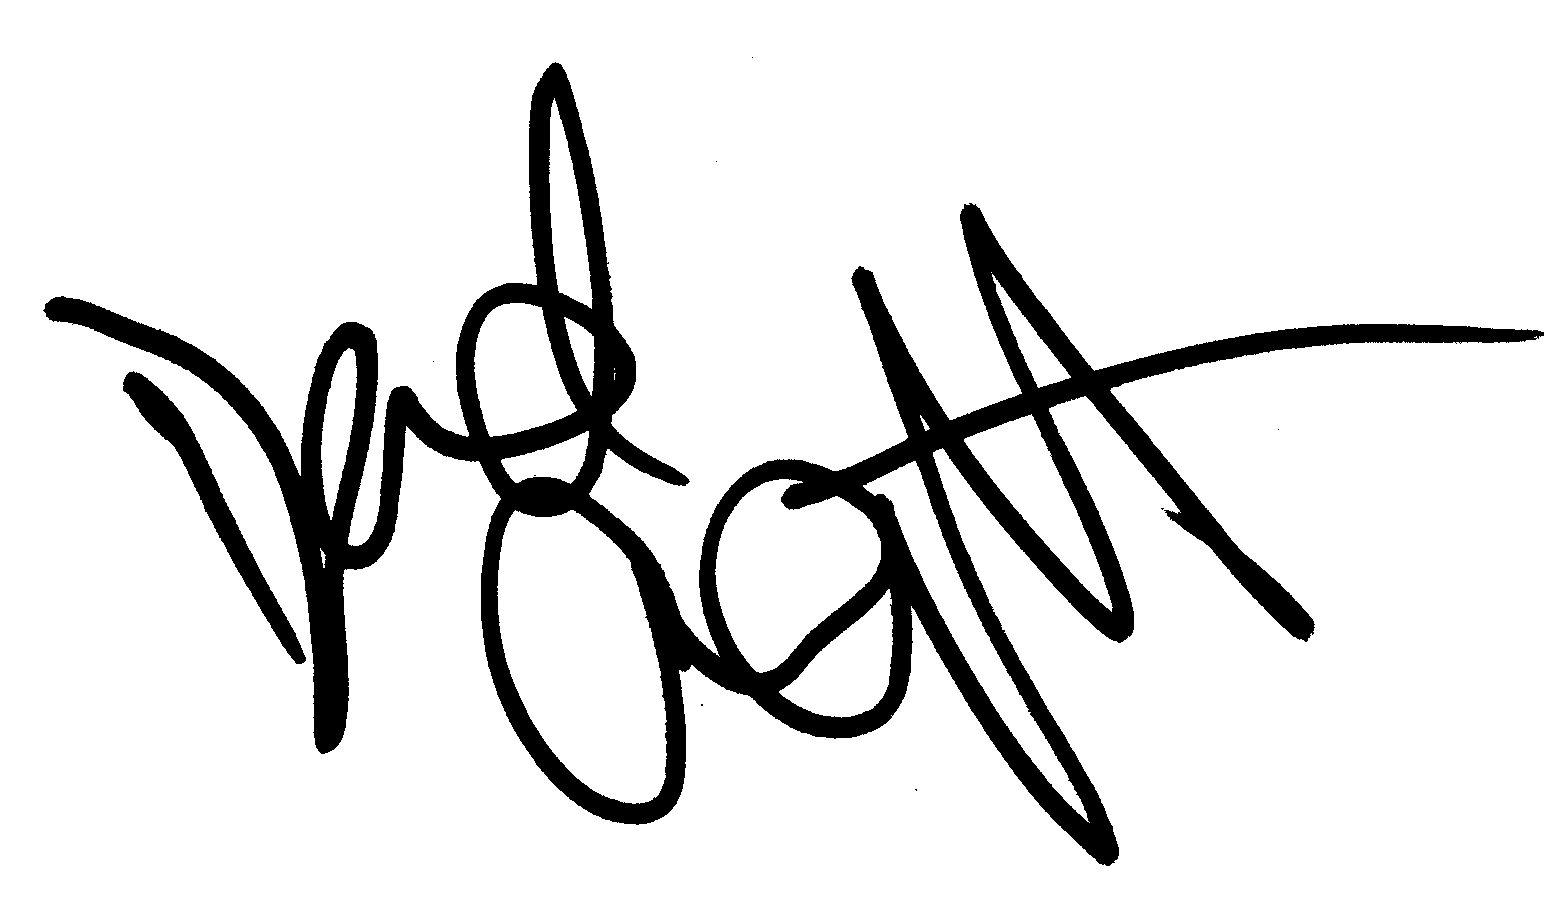 David Arquette autograph facsimile